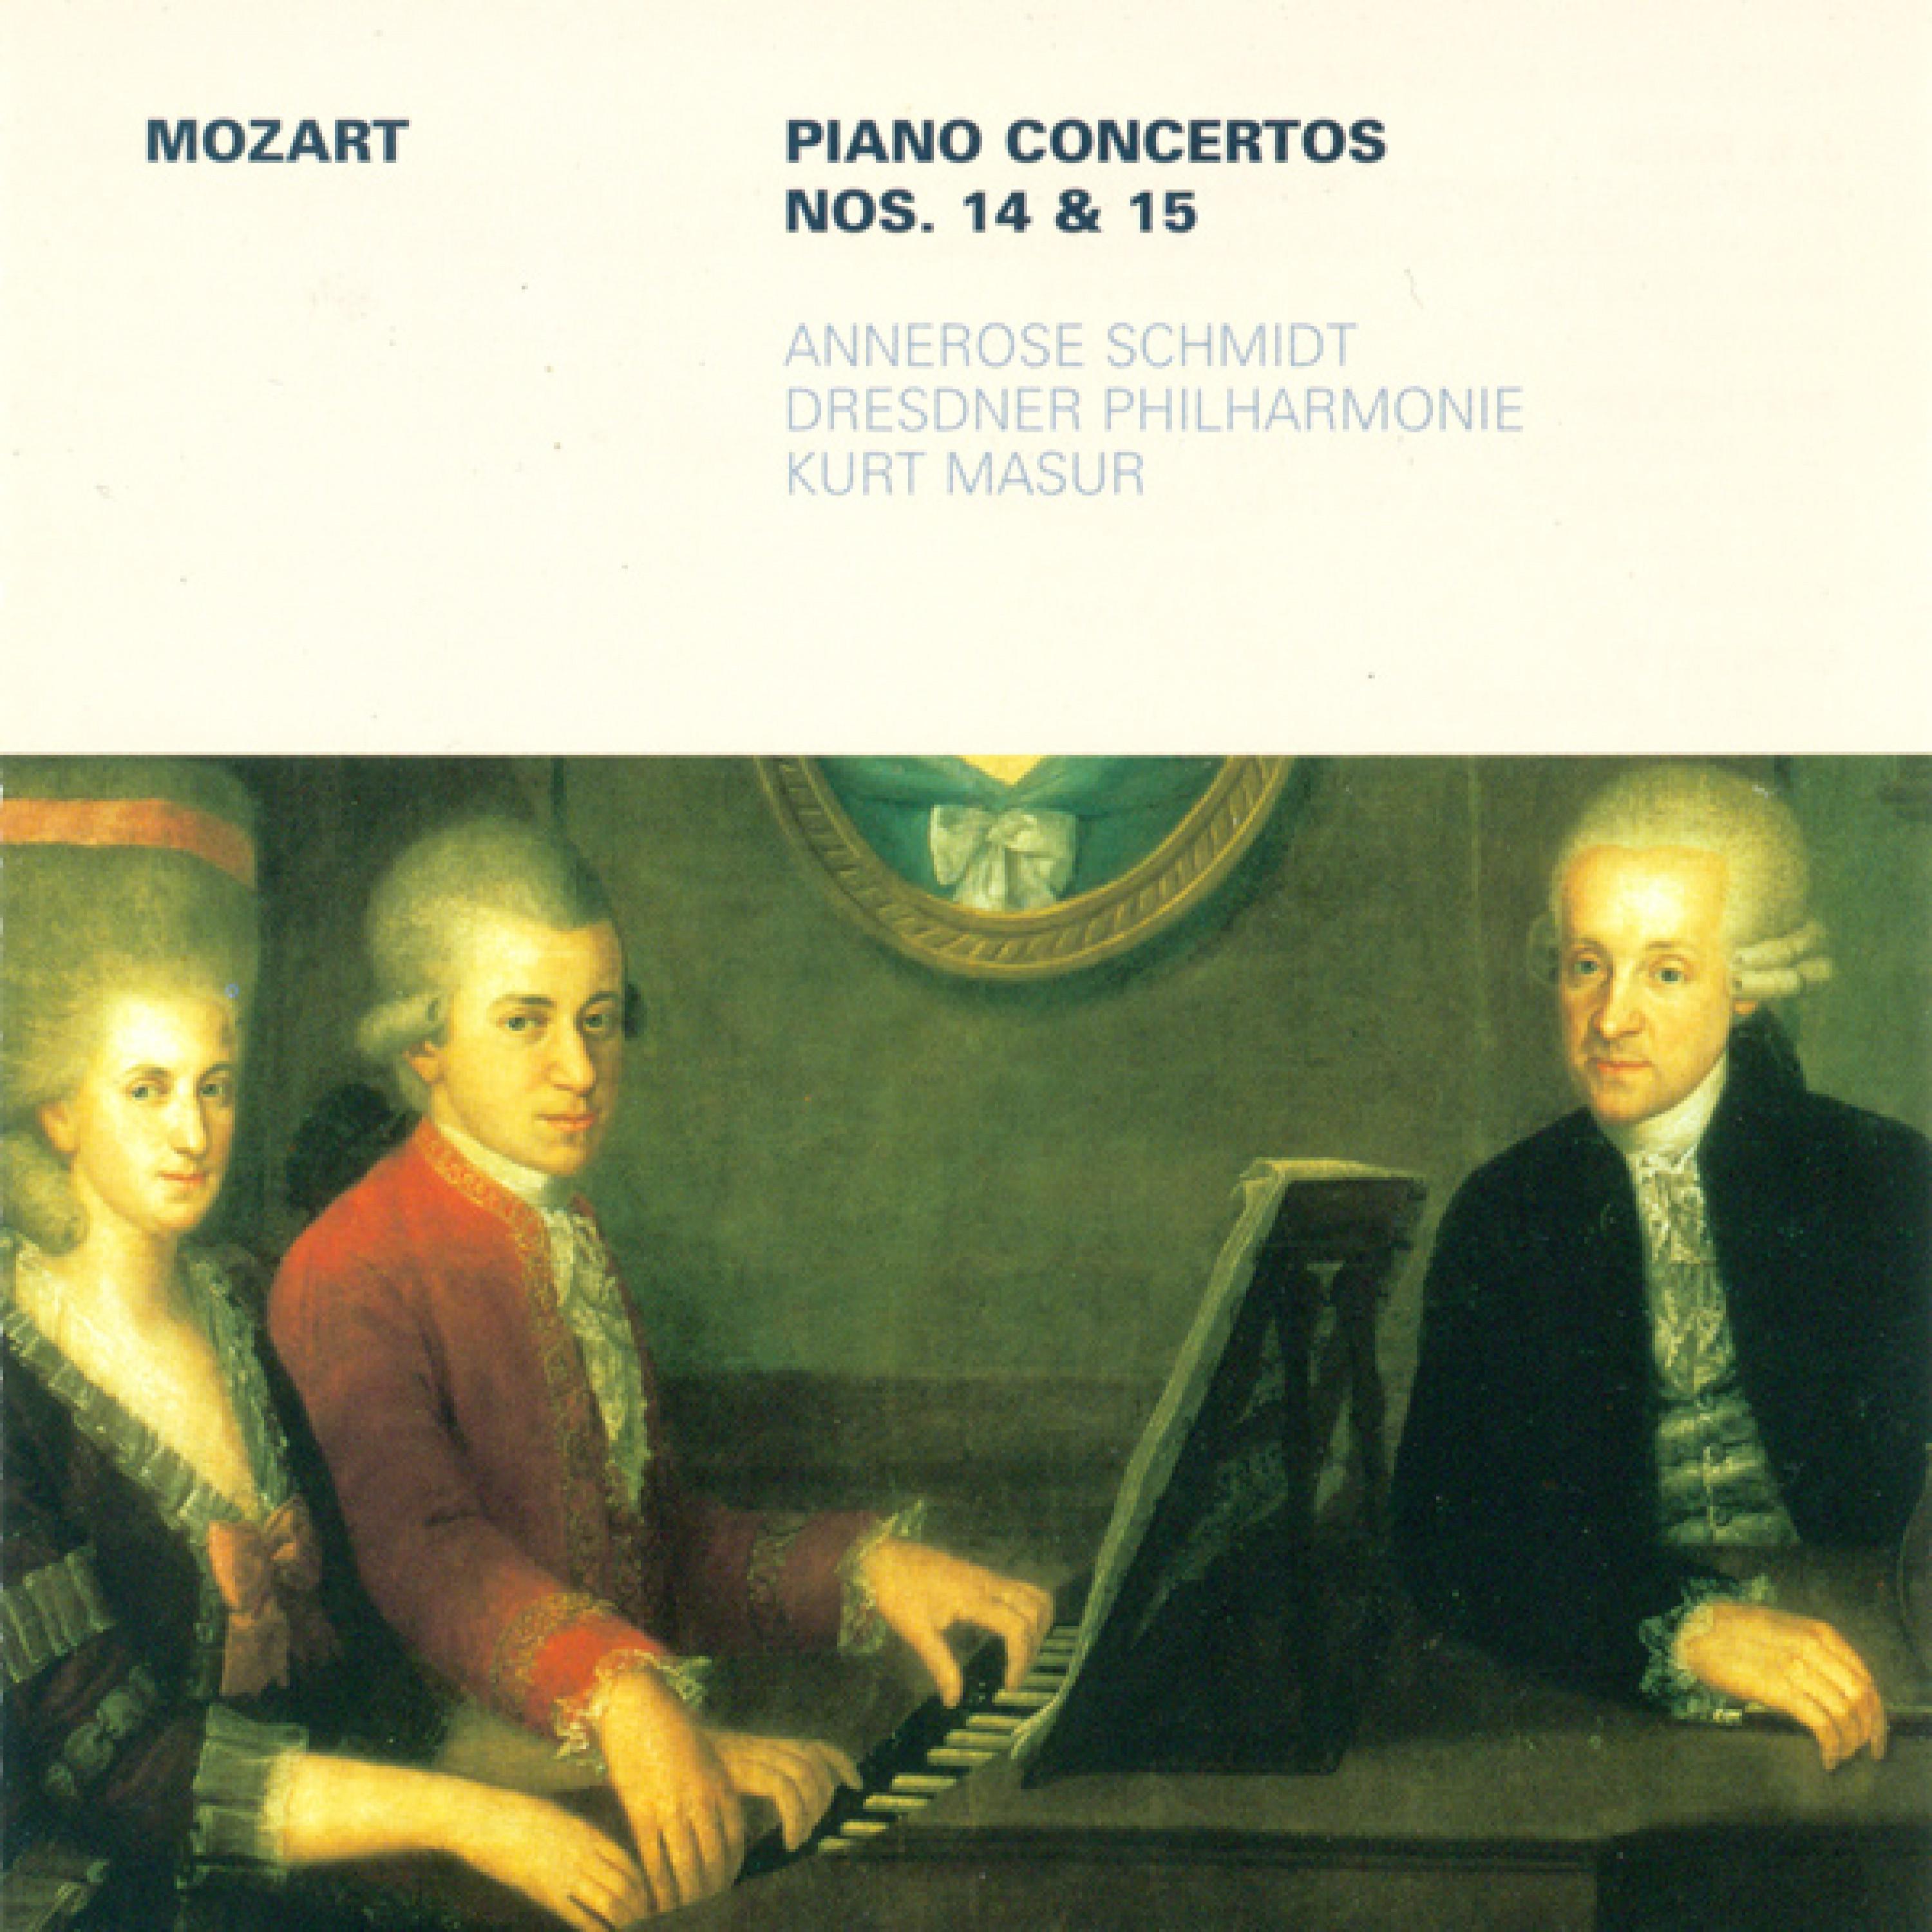 Piano Concerto No. 14 in E-Flat Major, K. 449: II. Andantino